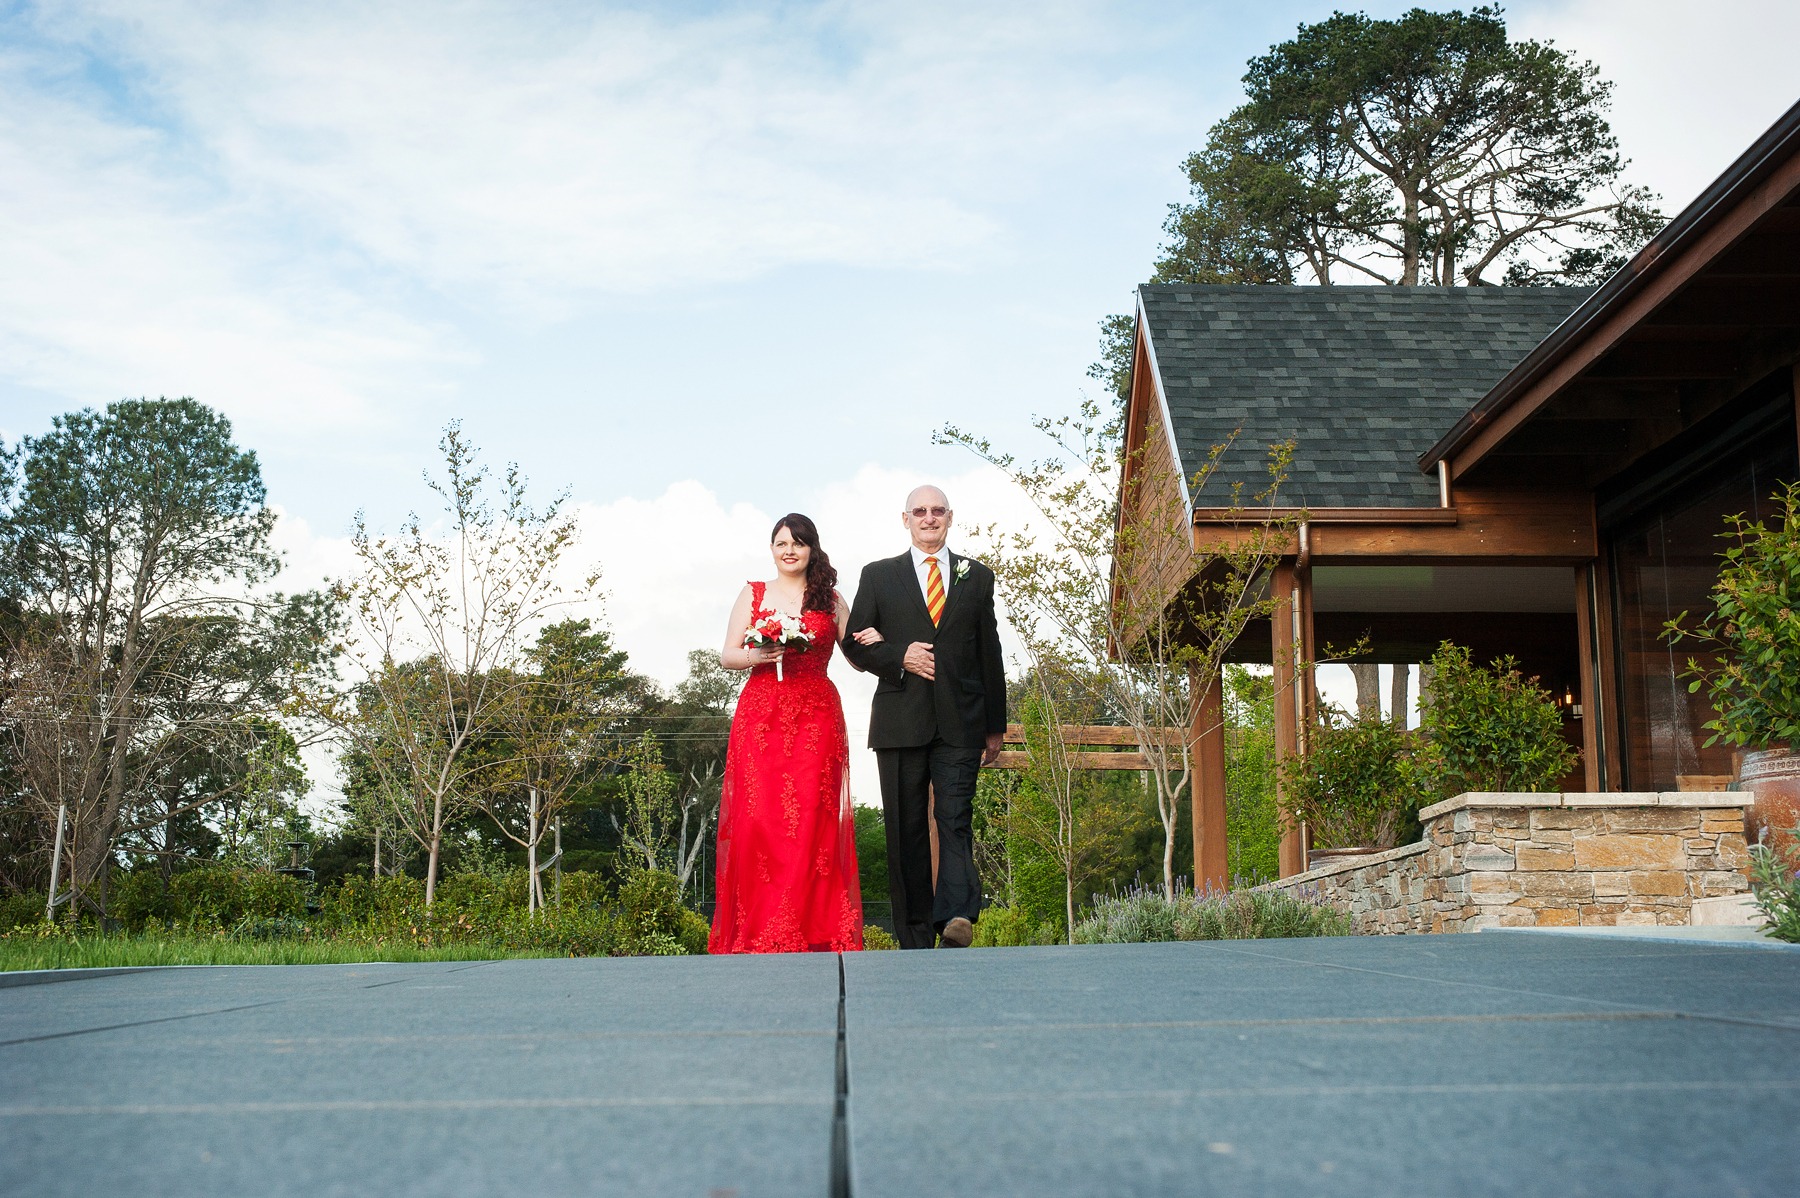 Getting married at Pialligo Estate